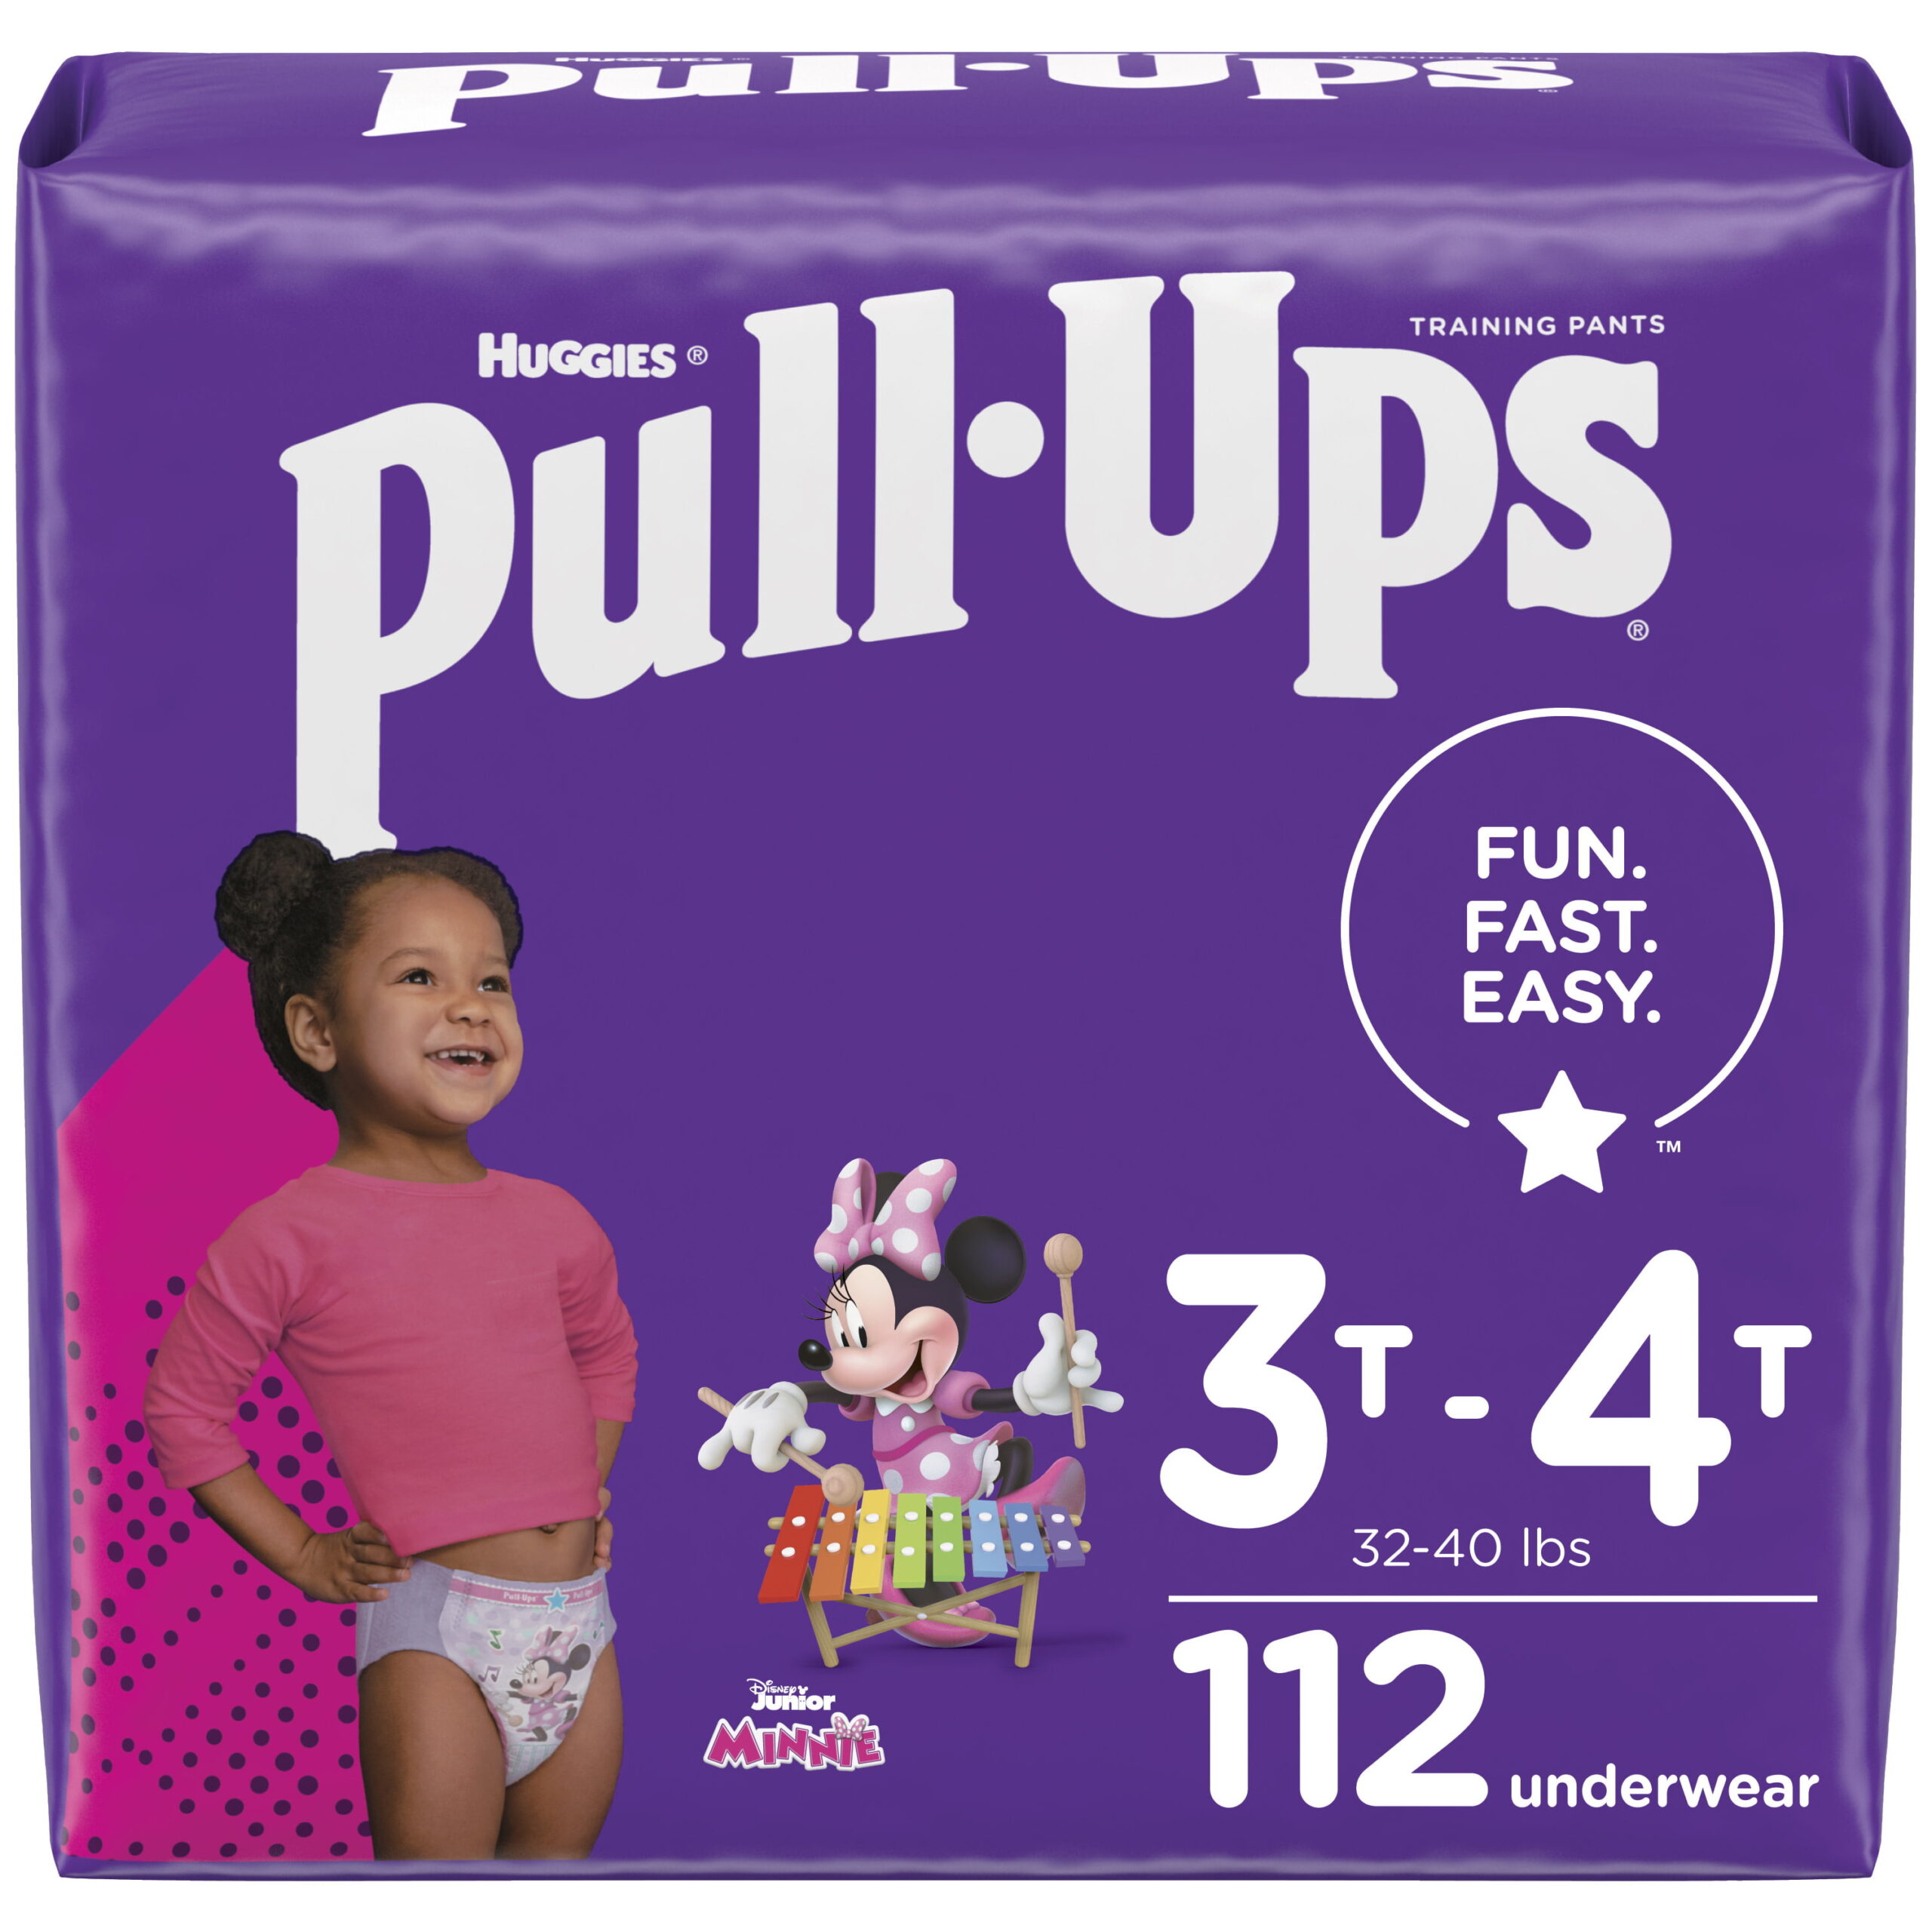 NEW: Huggies Pull Ups Toilet Training Pants. Girls size 3 (14-18kg